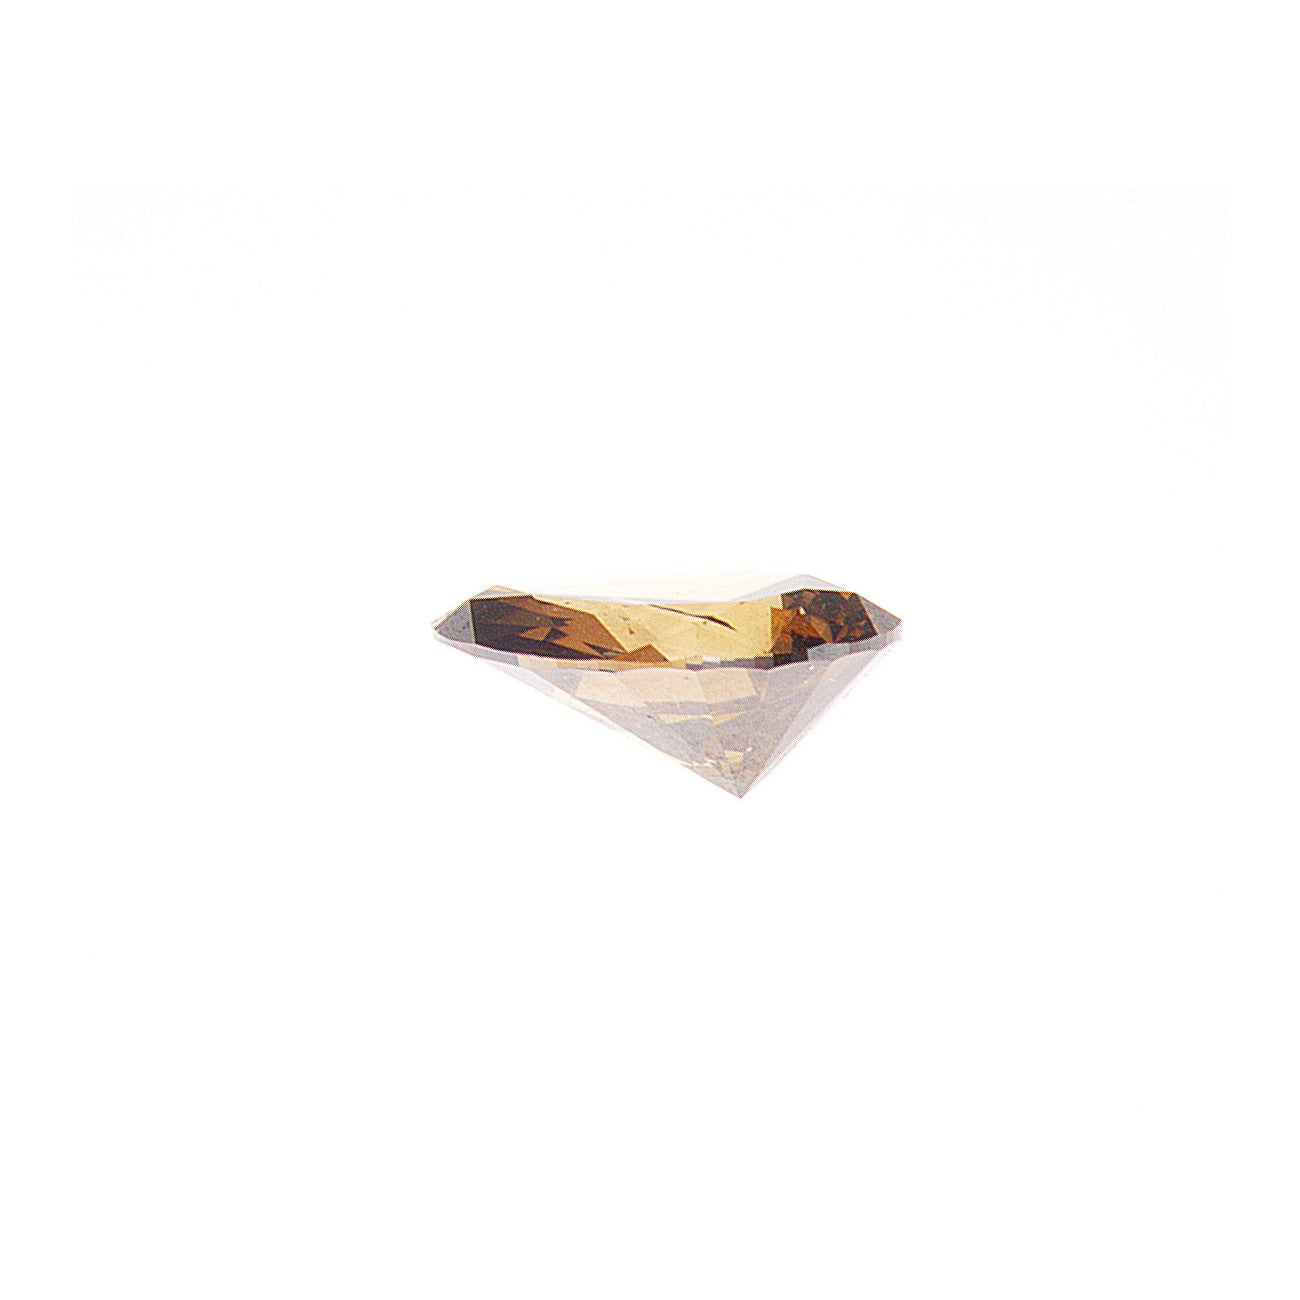 1.42ct Fancy Deep Brown, Pear Shape Diamond, SI2 - 9.27 x 6.50 x 4.05mm